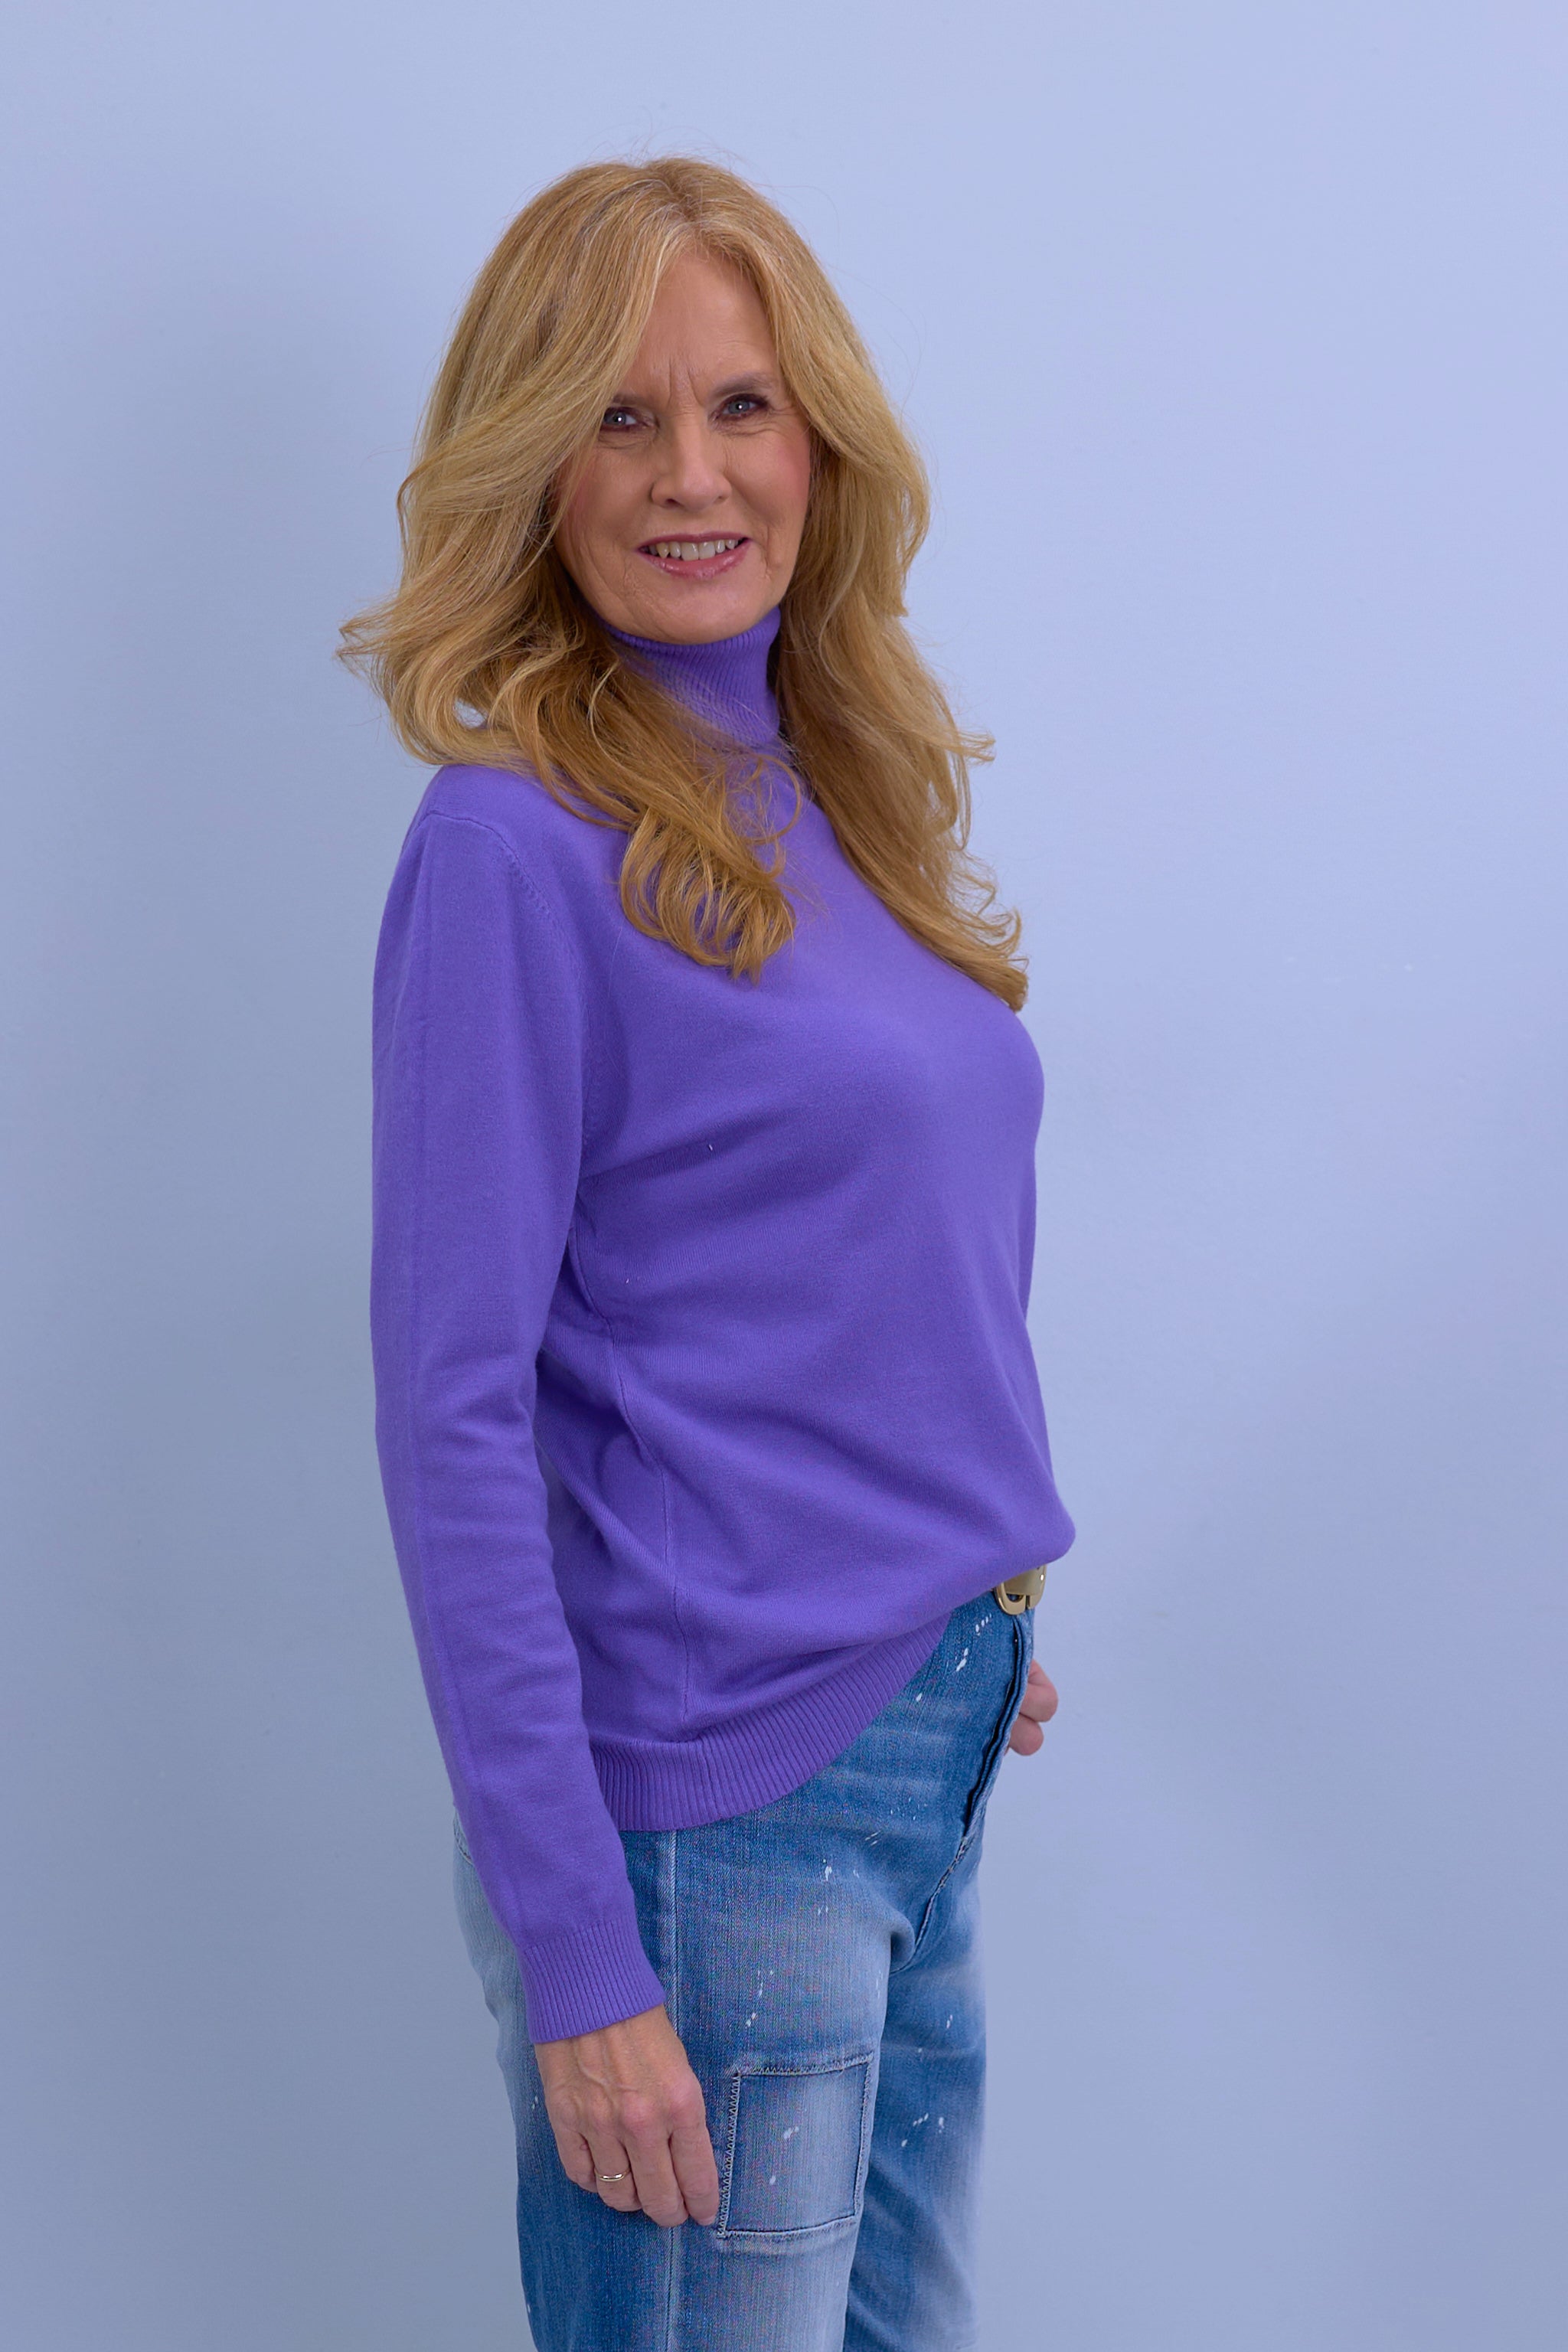 Turleneck sweater "Senora", light purple